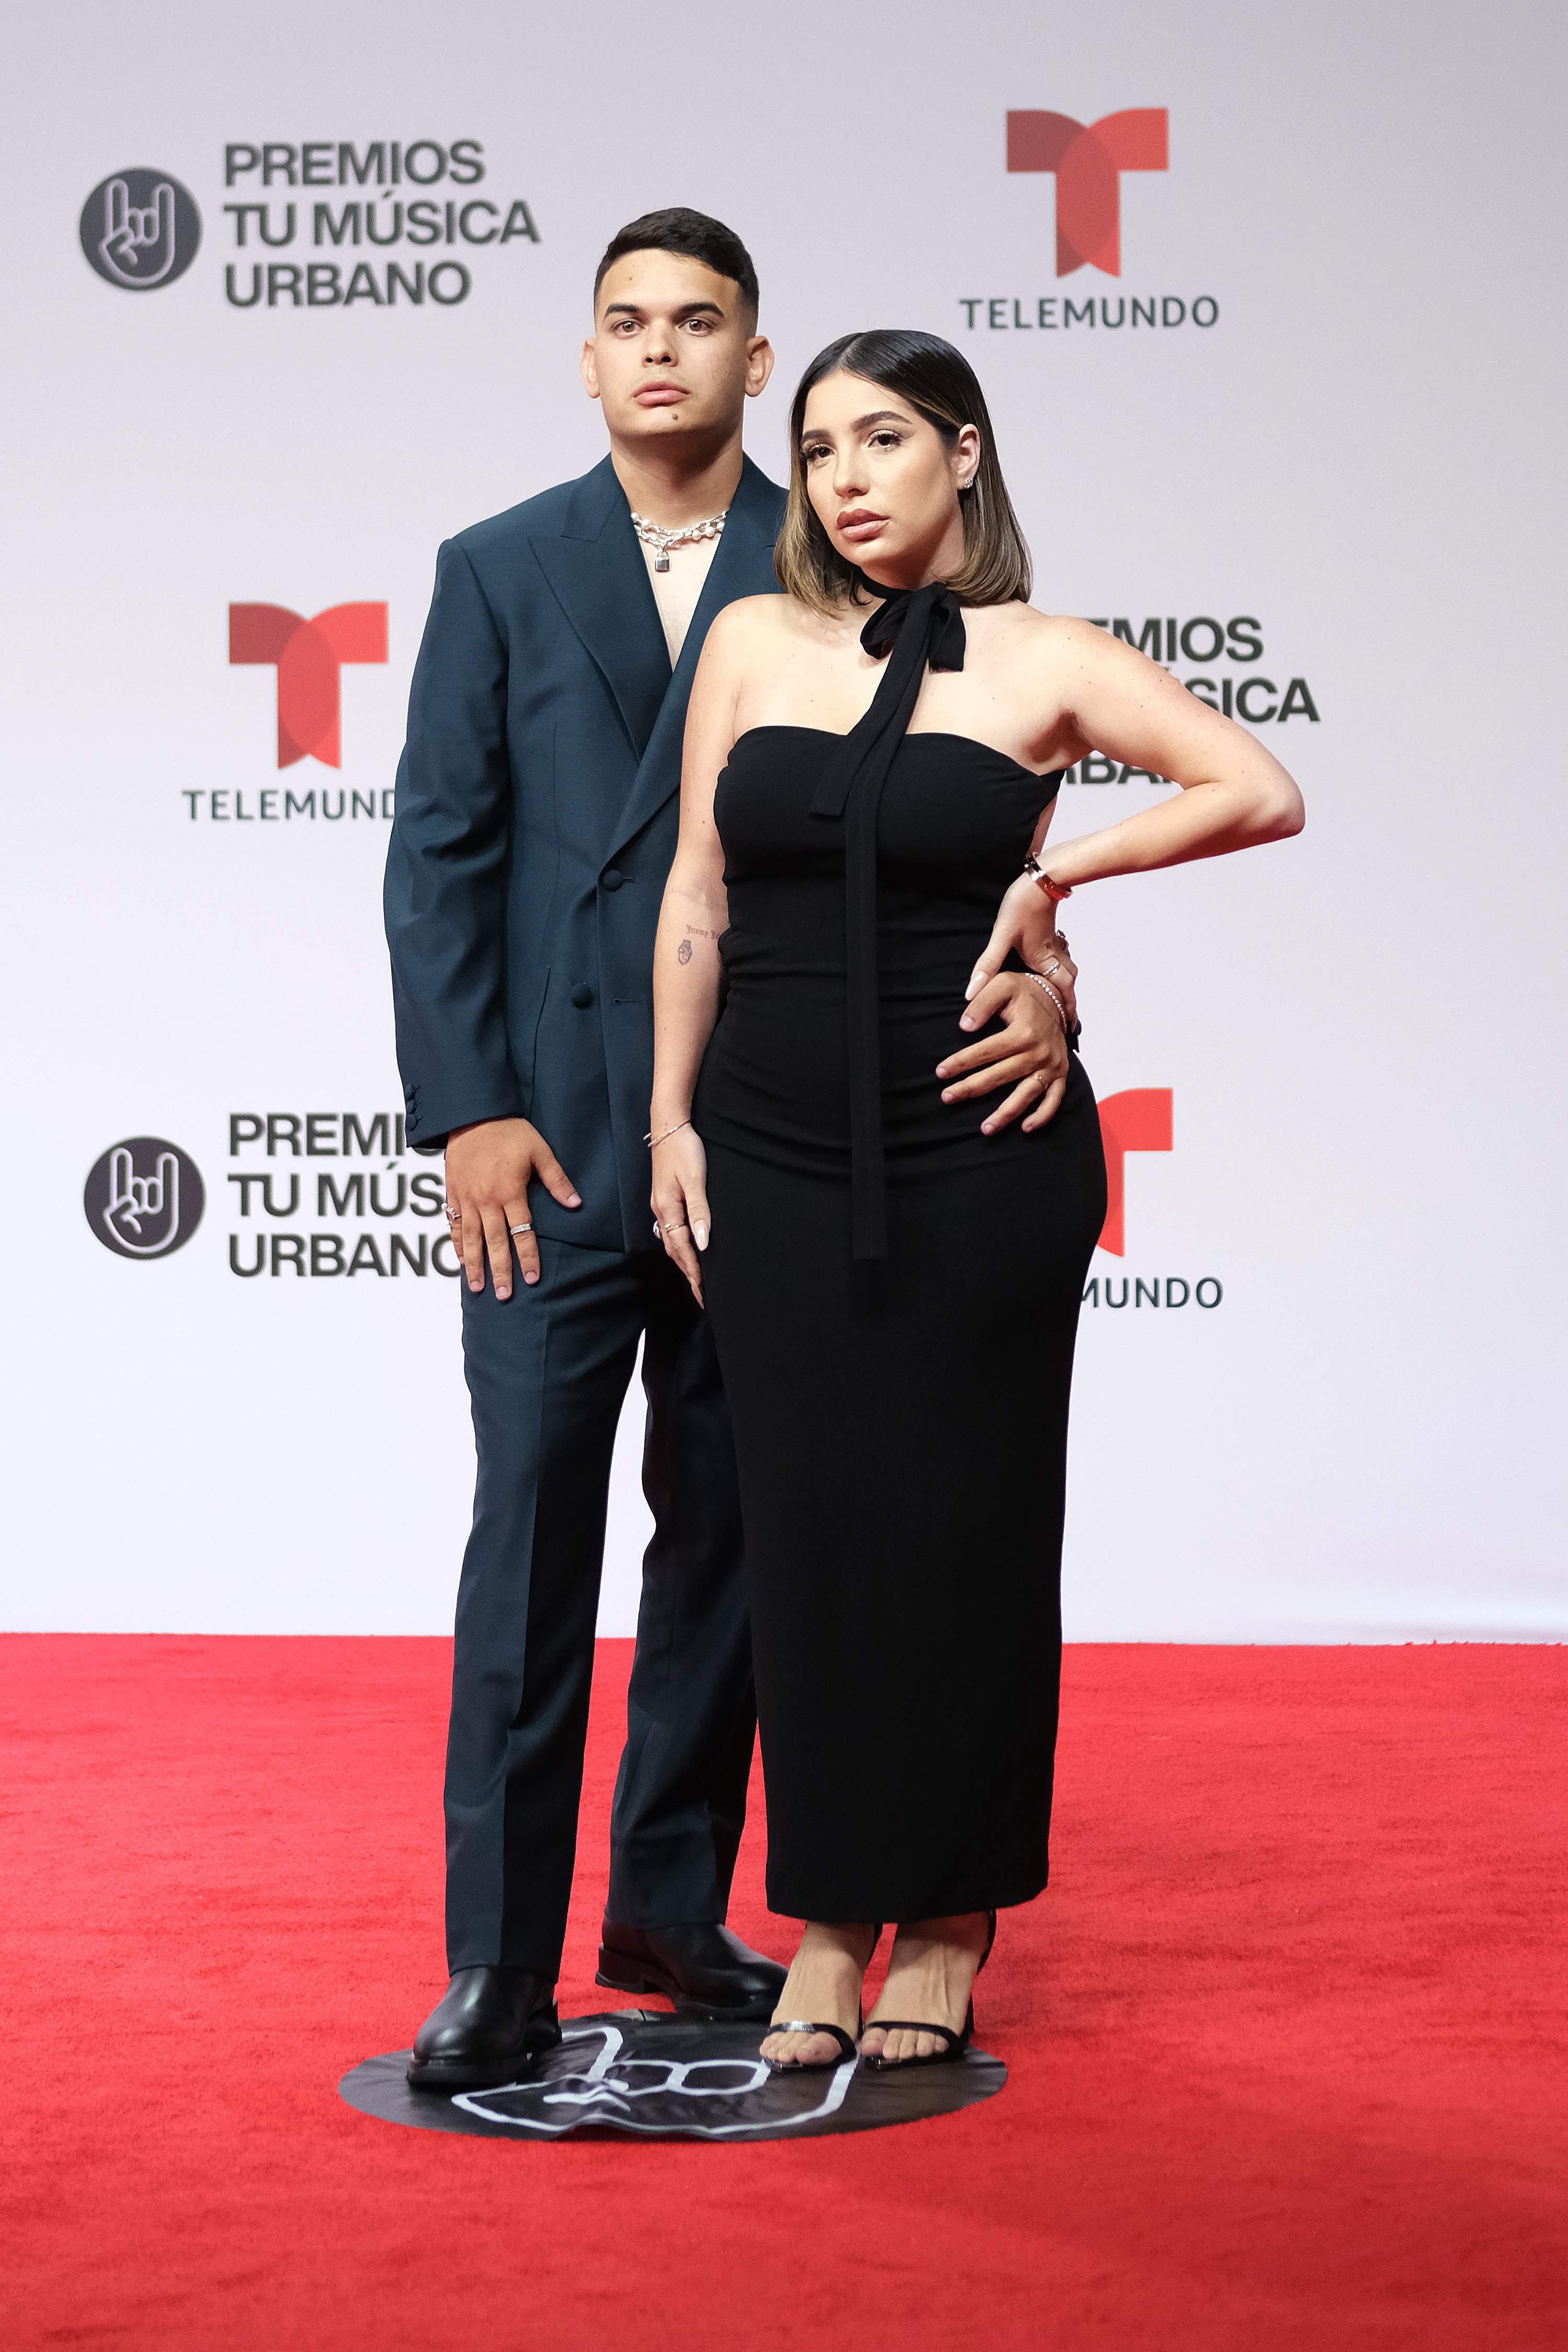 Jeremy Ayala and Andrea De Castro at Premios Tu Música Urbano 2022 in San Juan, Puerto Rico on June 23, 2022. | Source: Getty Images